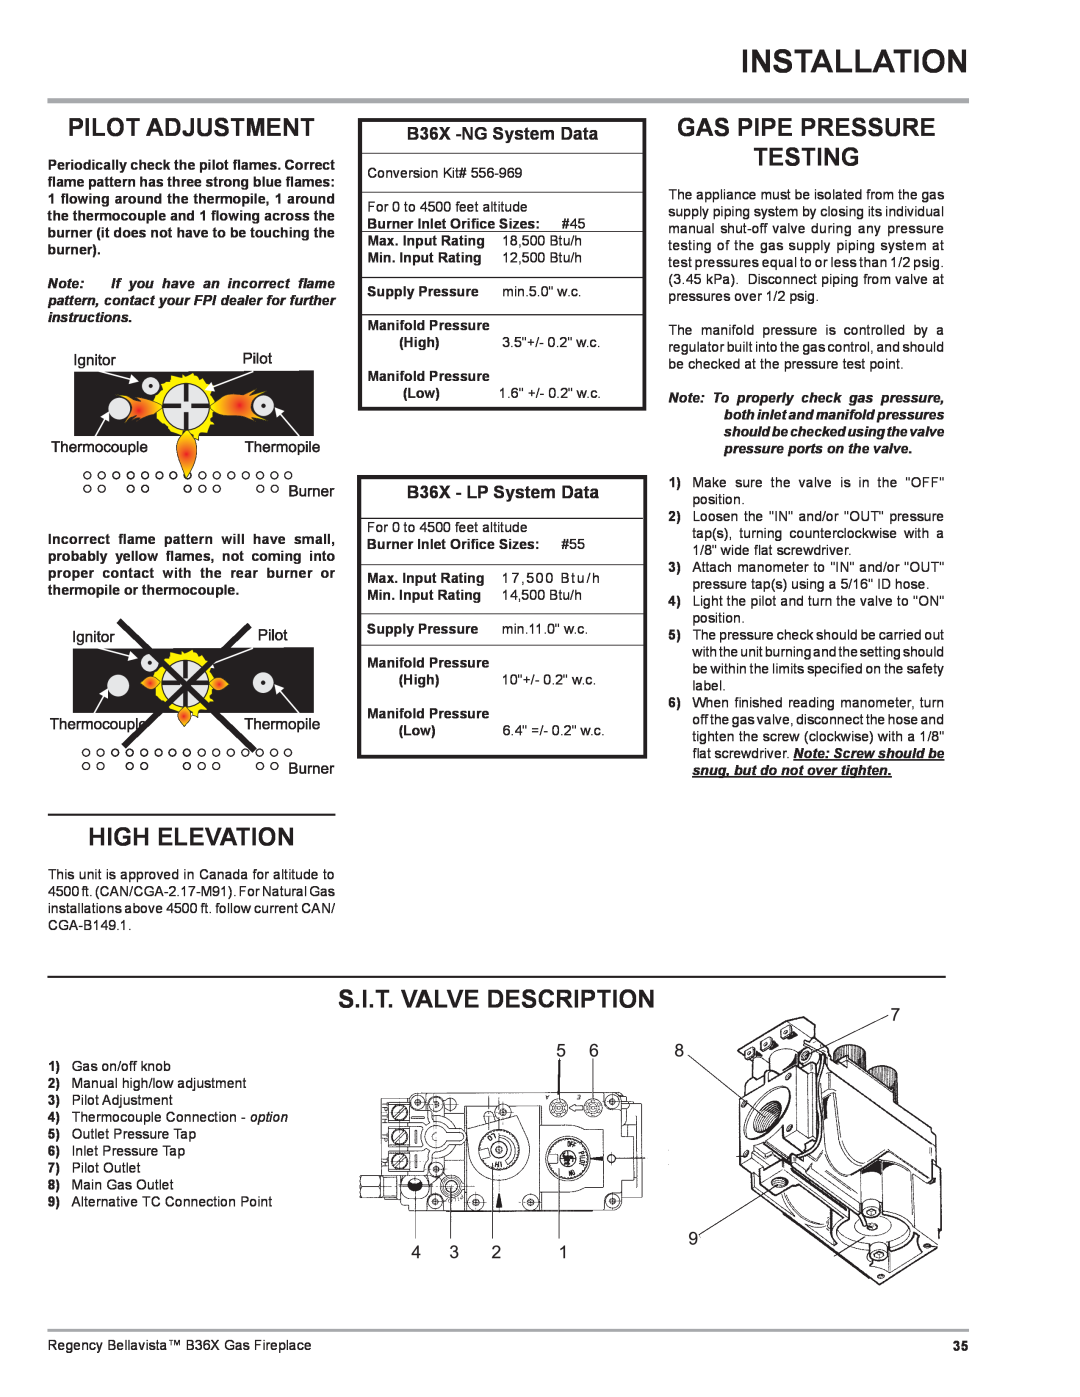 Regency B36X Installation, Pilot Adjustment, Gas Pipe Pressure Testing, High Elevation, S.I.T. Valve Description 